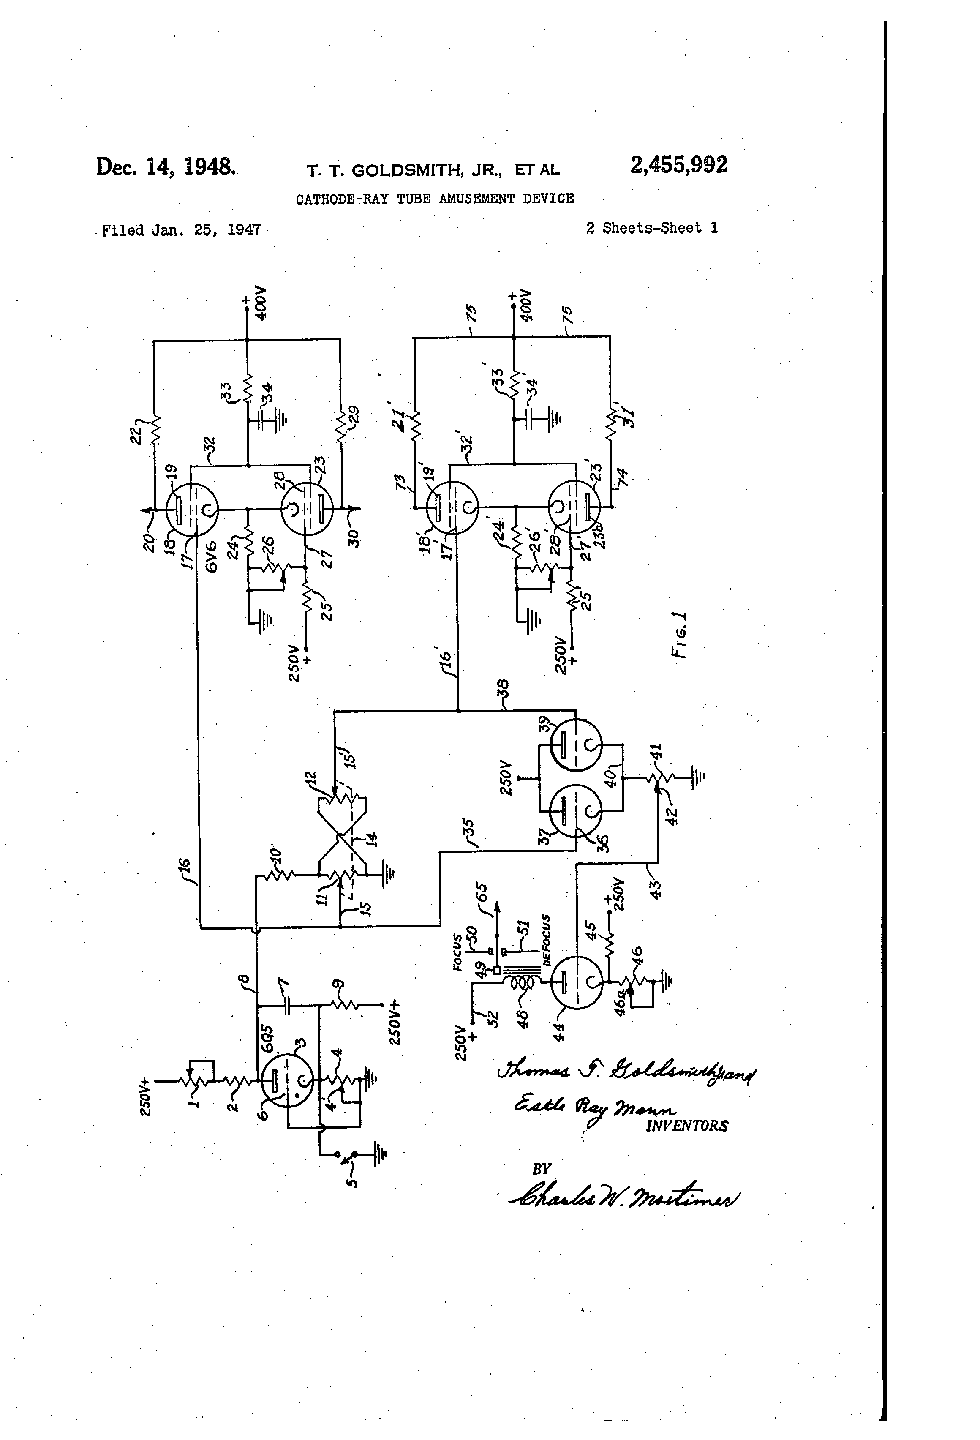 Thomas Goldsmith's patent